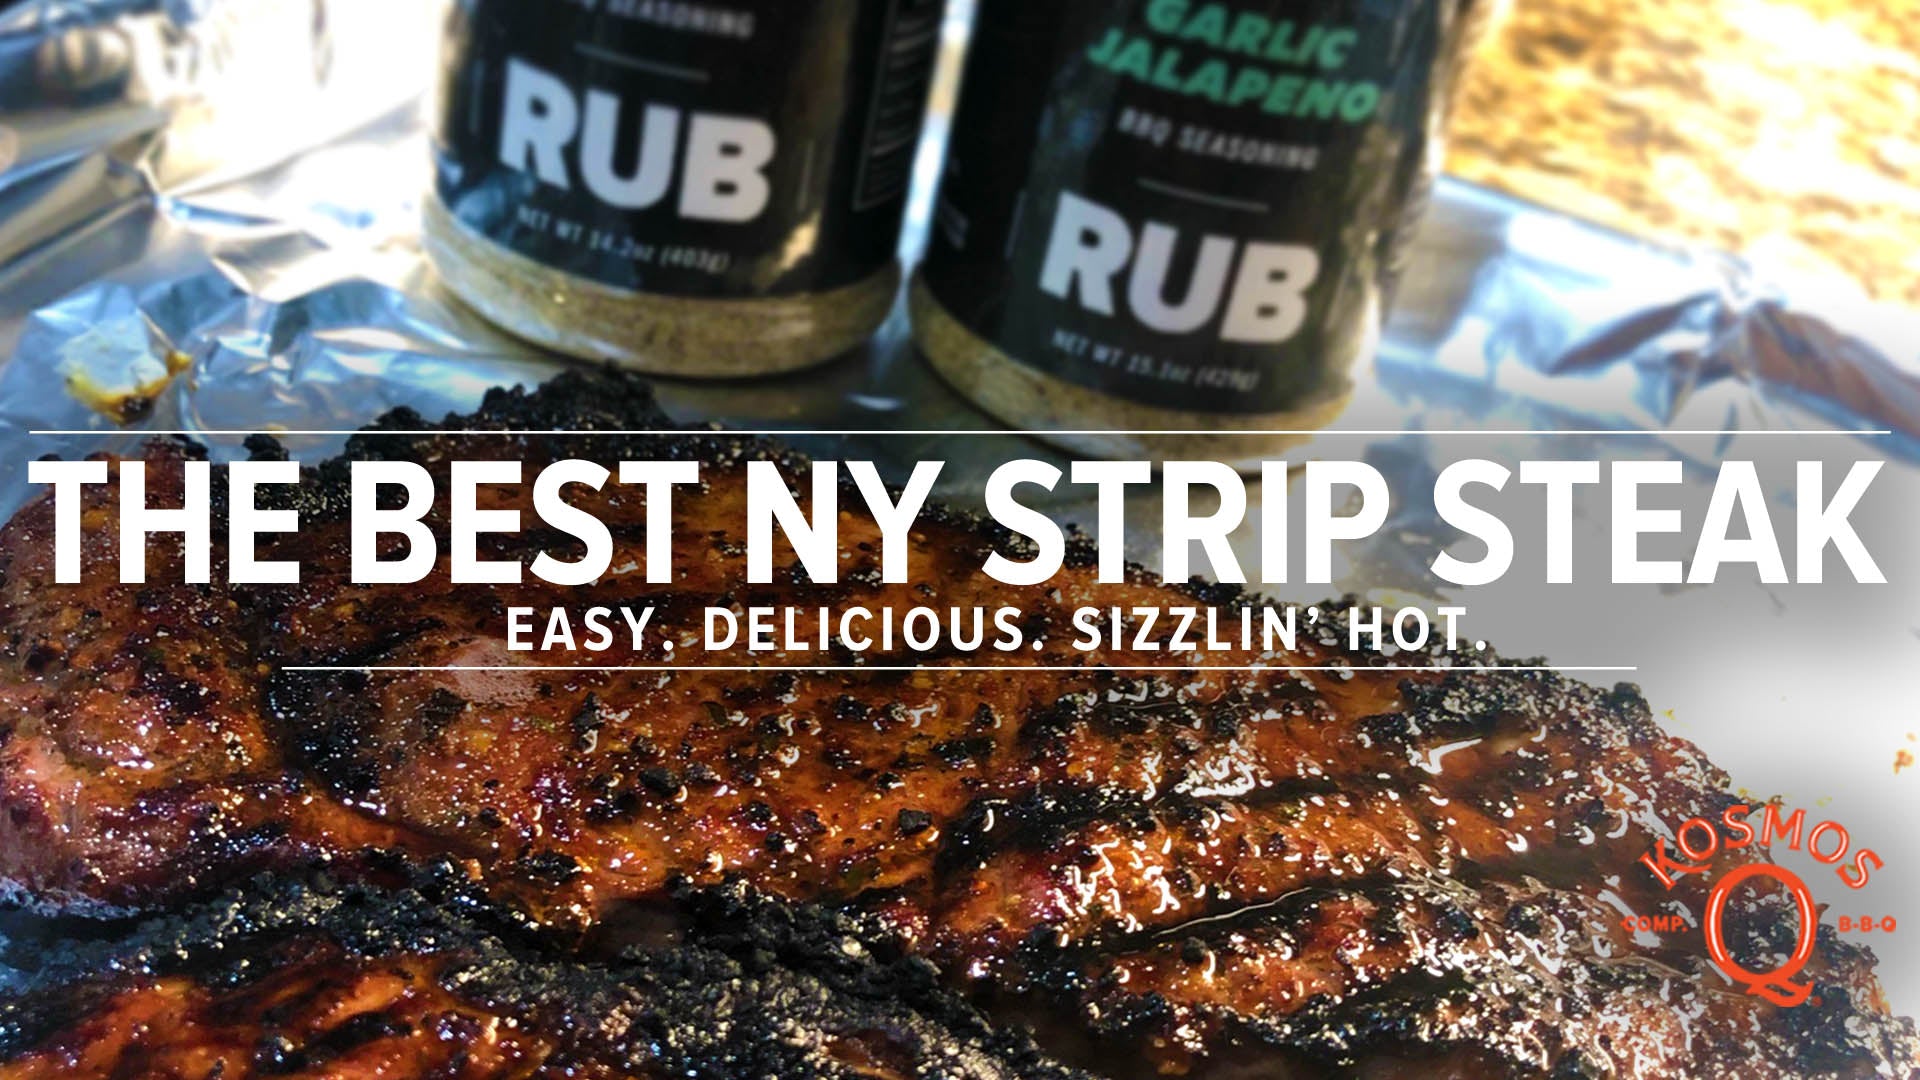 The Best New York Strip Steaks